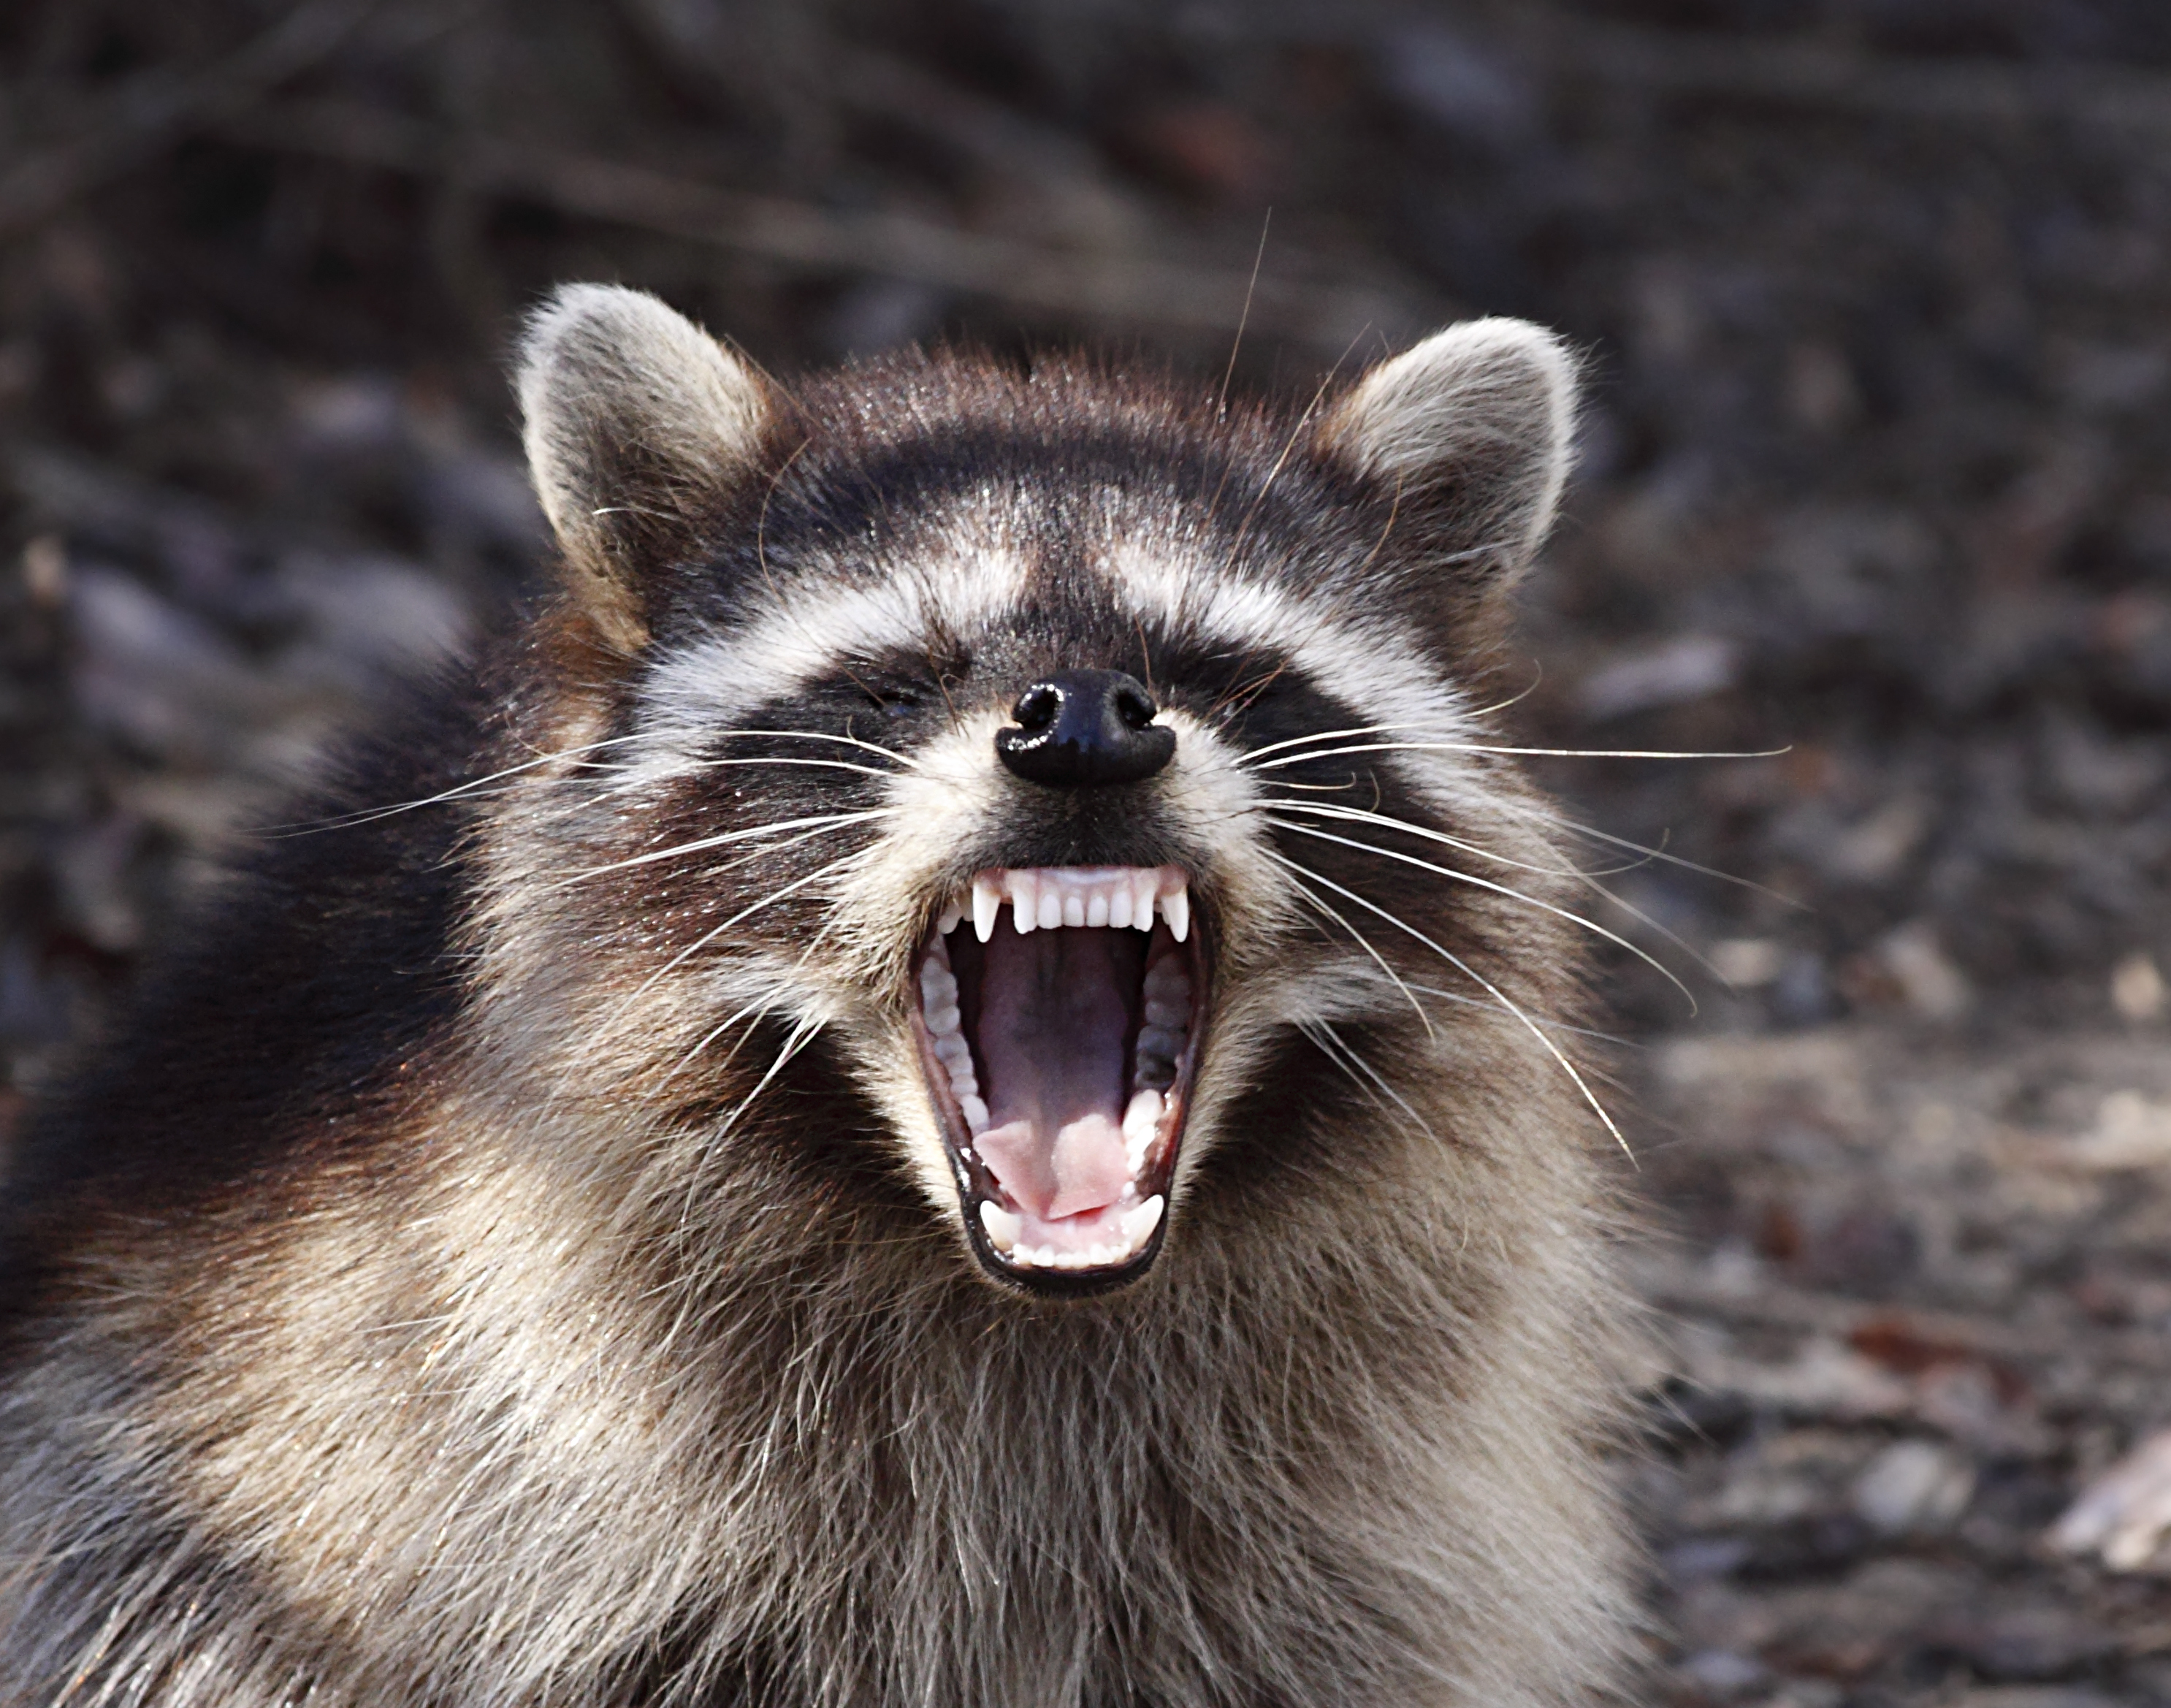 Raccoon with attitude